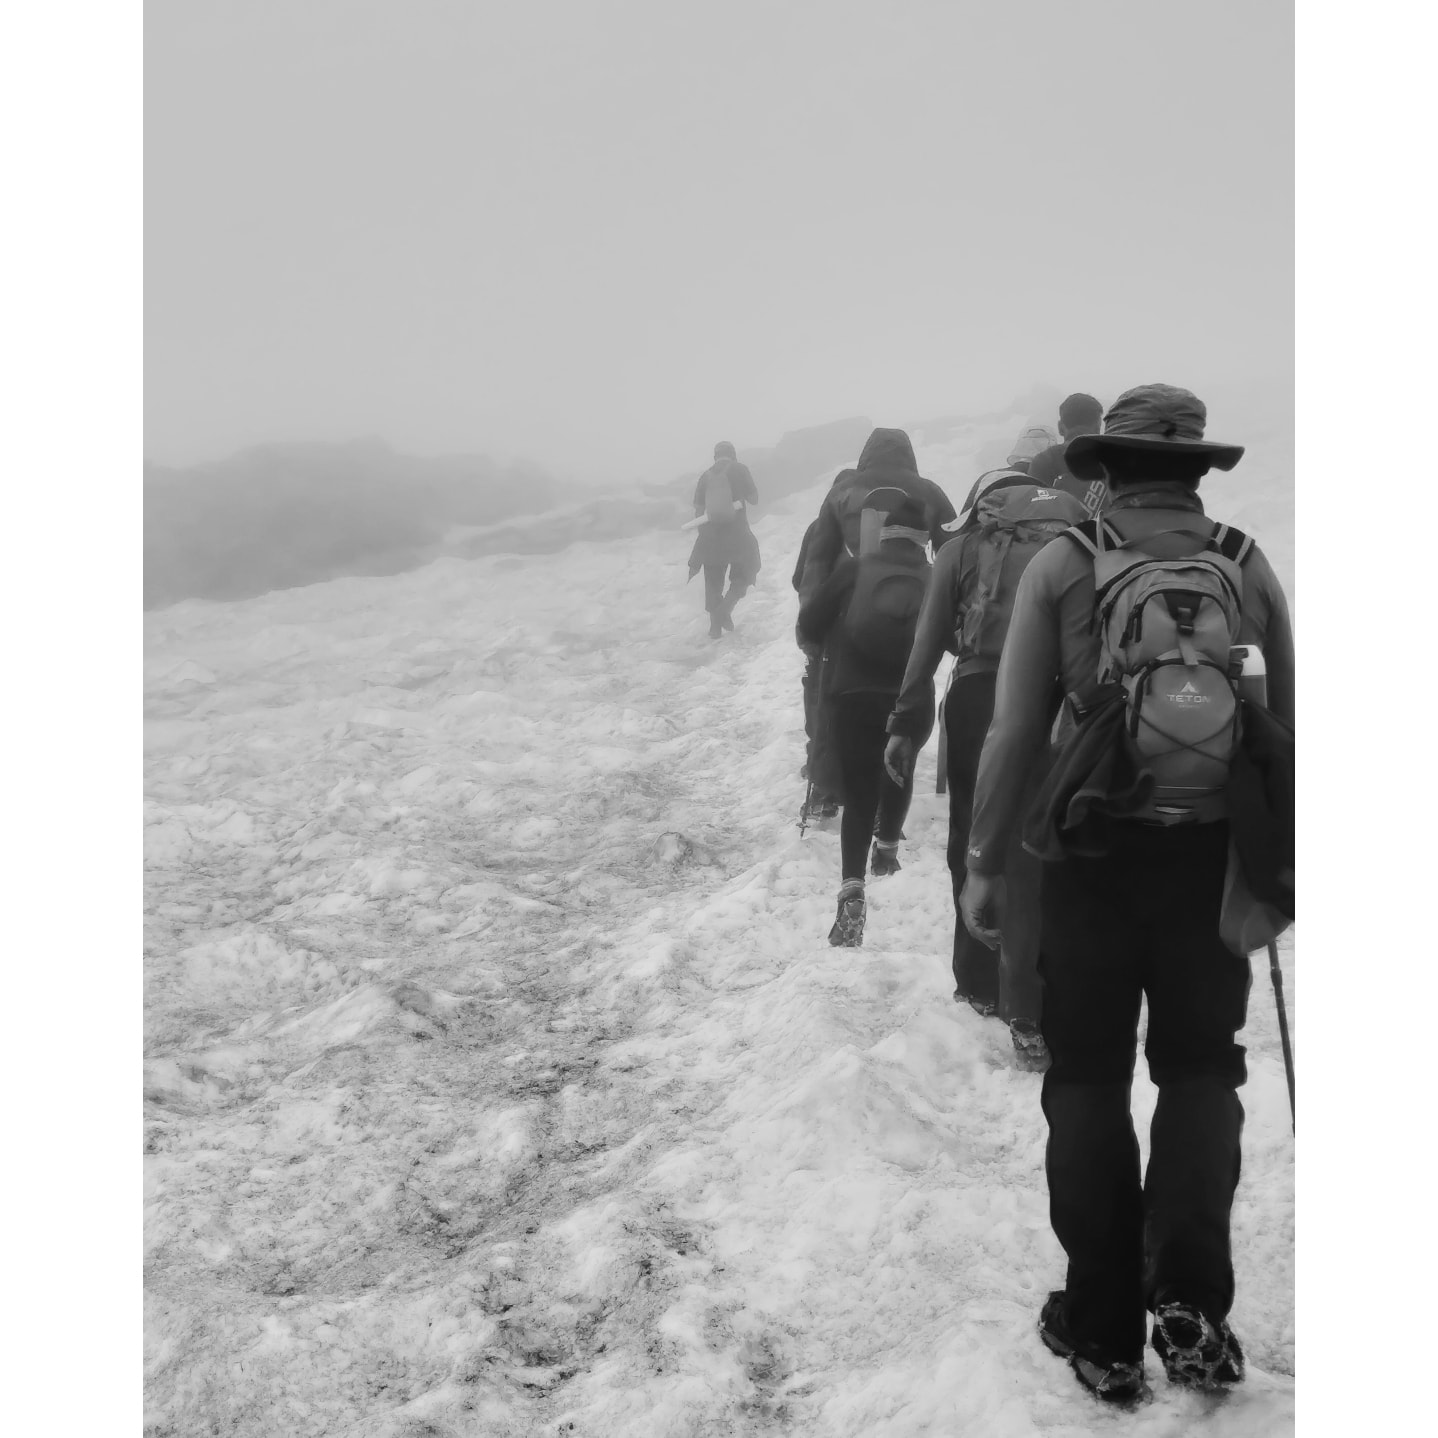 Bhrigu Lake trekkers walking on snow through a whiteout